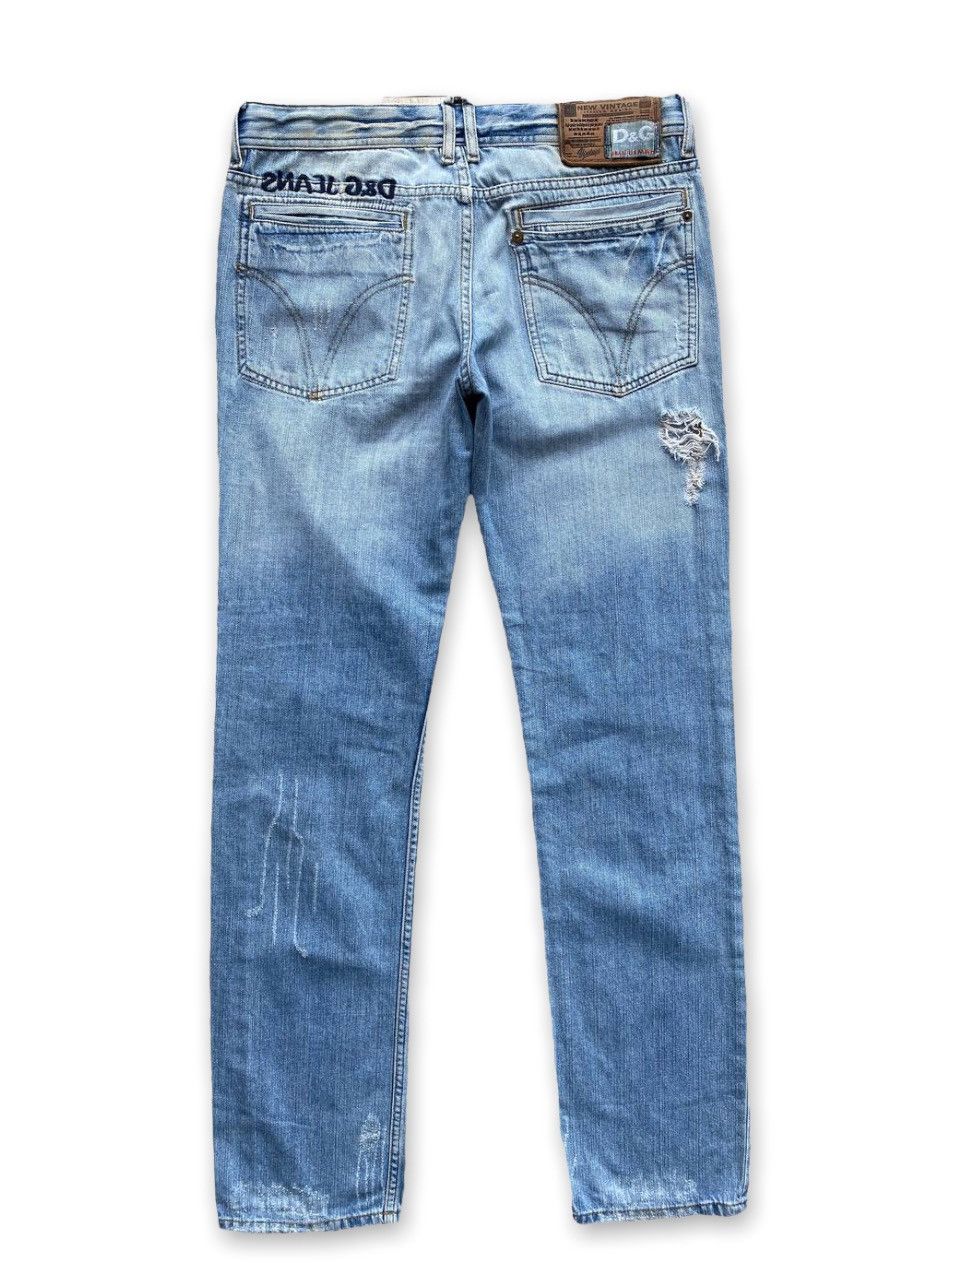 Dolce & Gabbana Dolce & Gabbana Audacious Straight Jeans Denim Pants Size US 36 / EU 52 - 4 Thumbnail